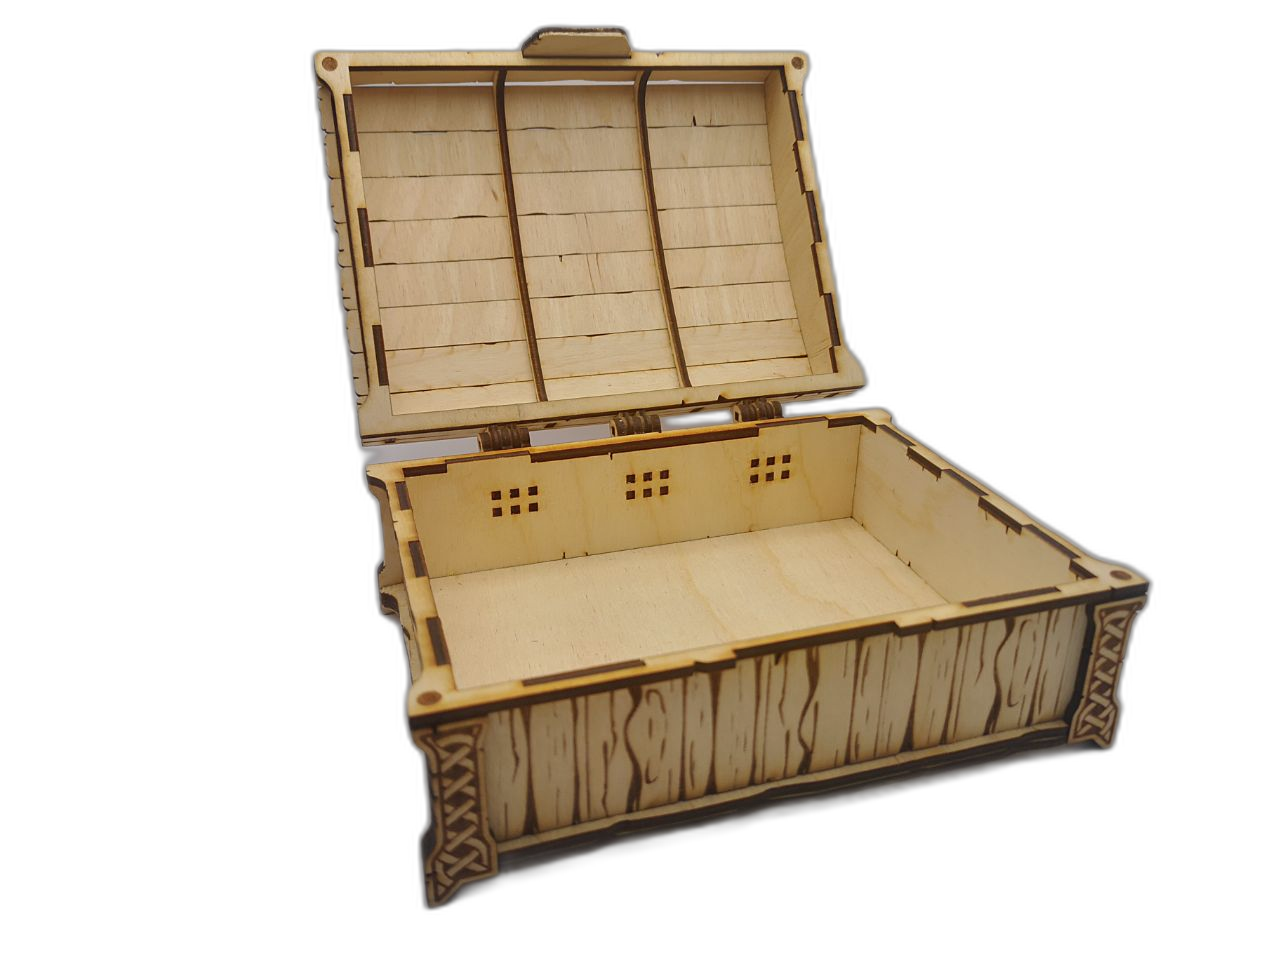 Storage/treasure chest